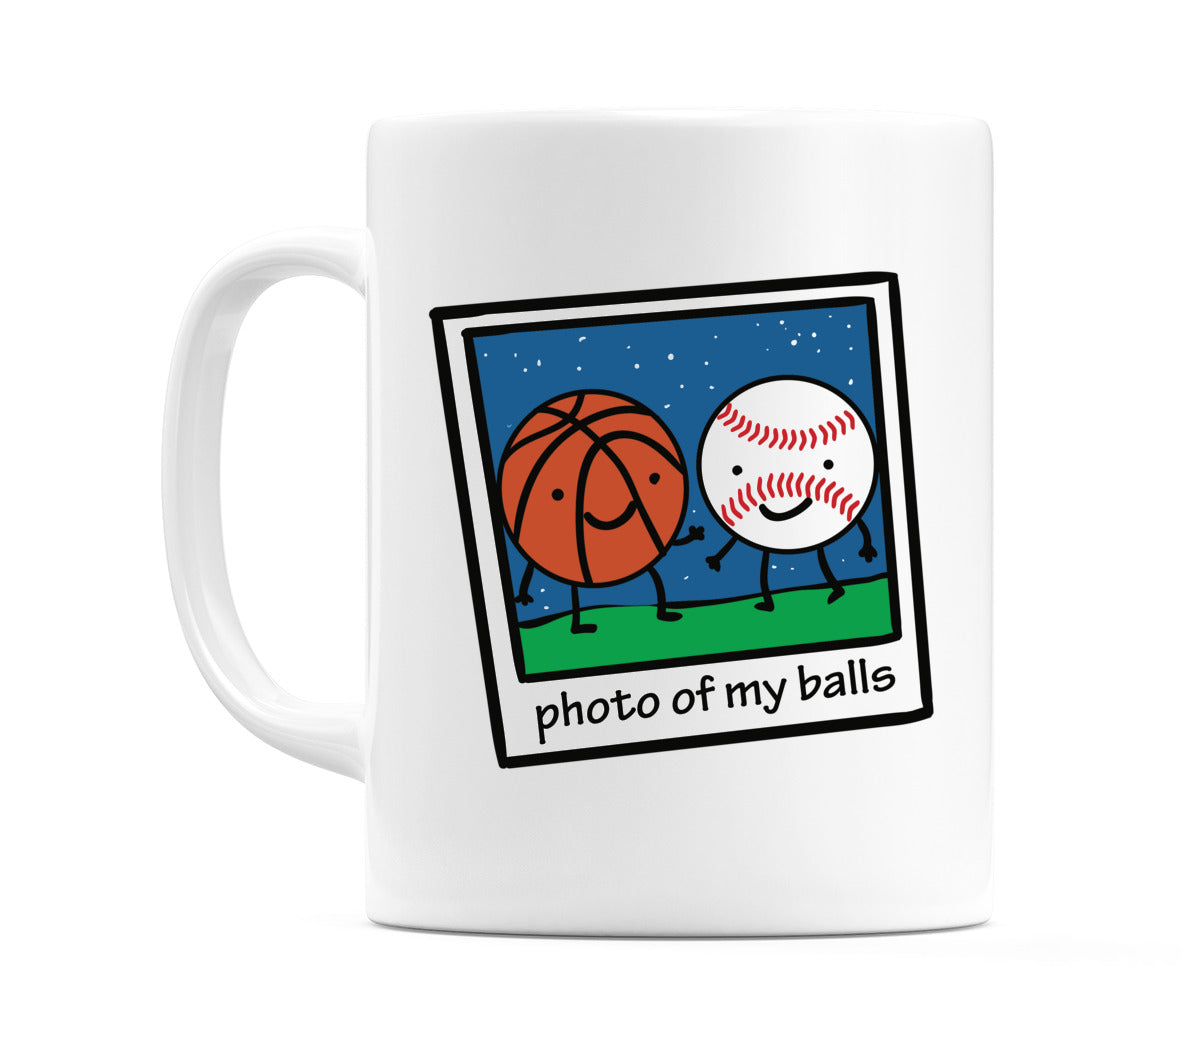 Photo Of My Balls Mug